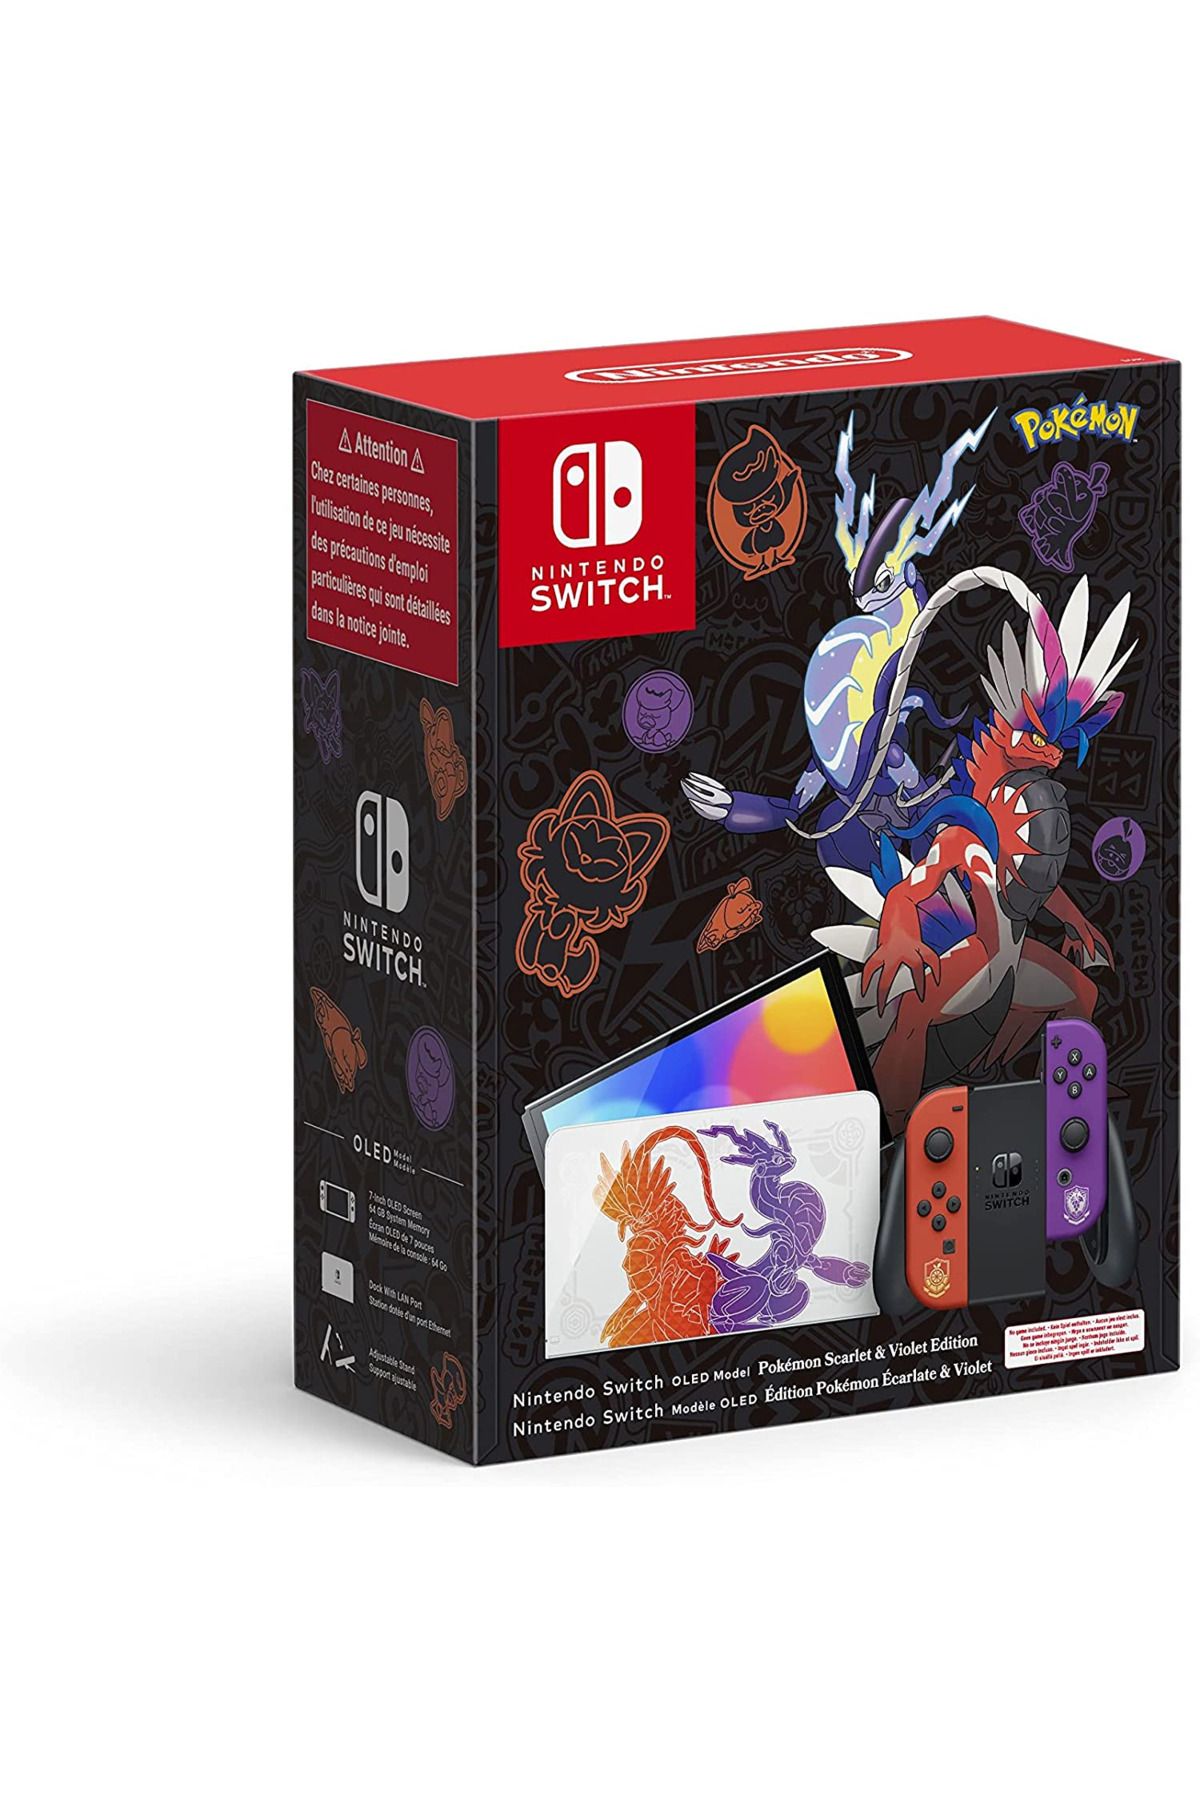 Nintendo Nİntendo Switch Oled Pokemon Scarlet And Violet Limited Edition